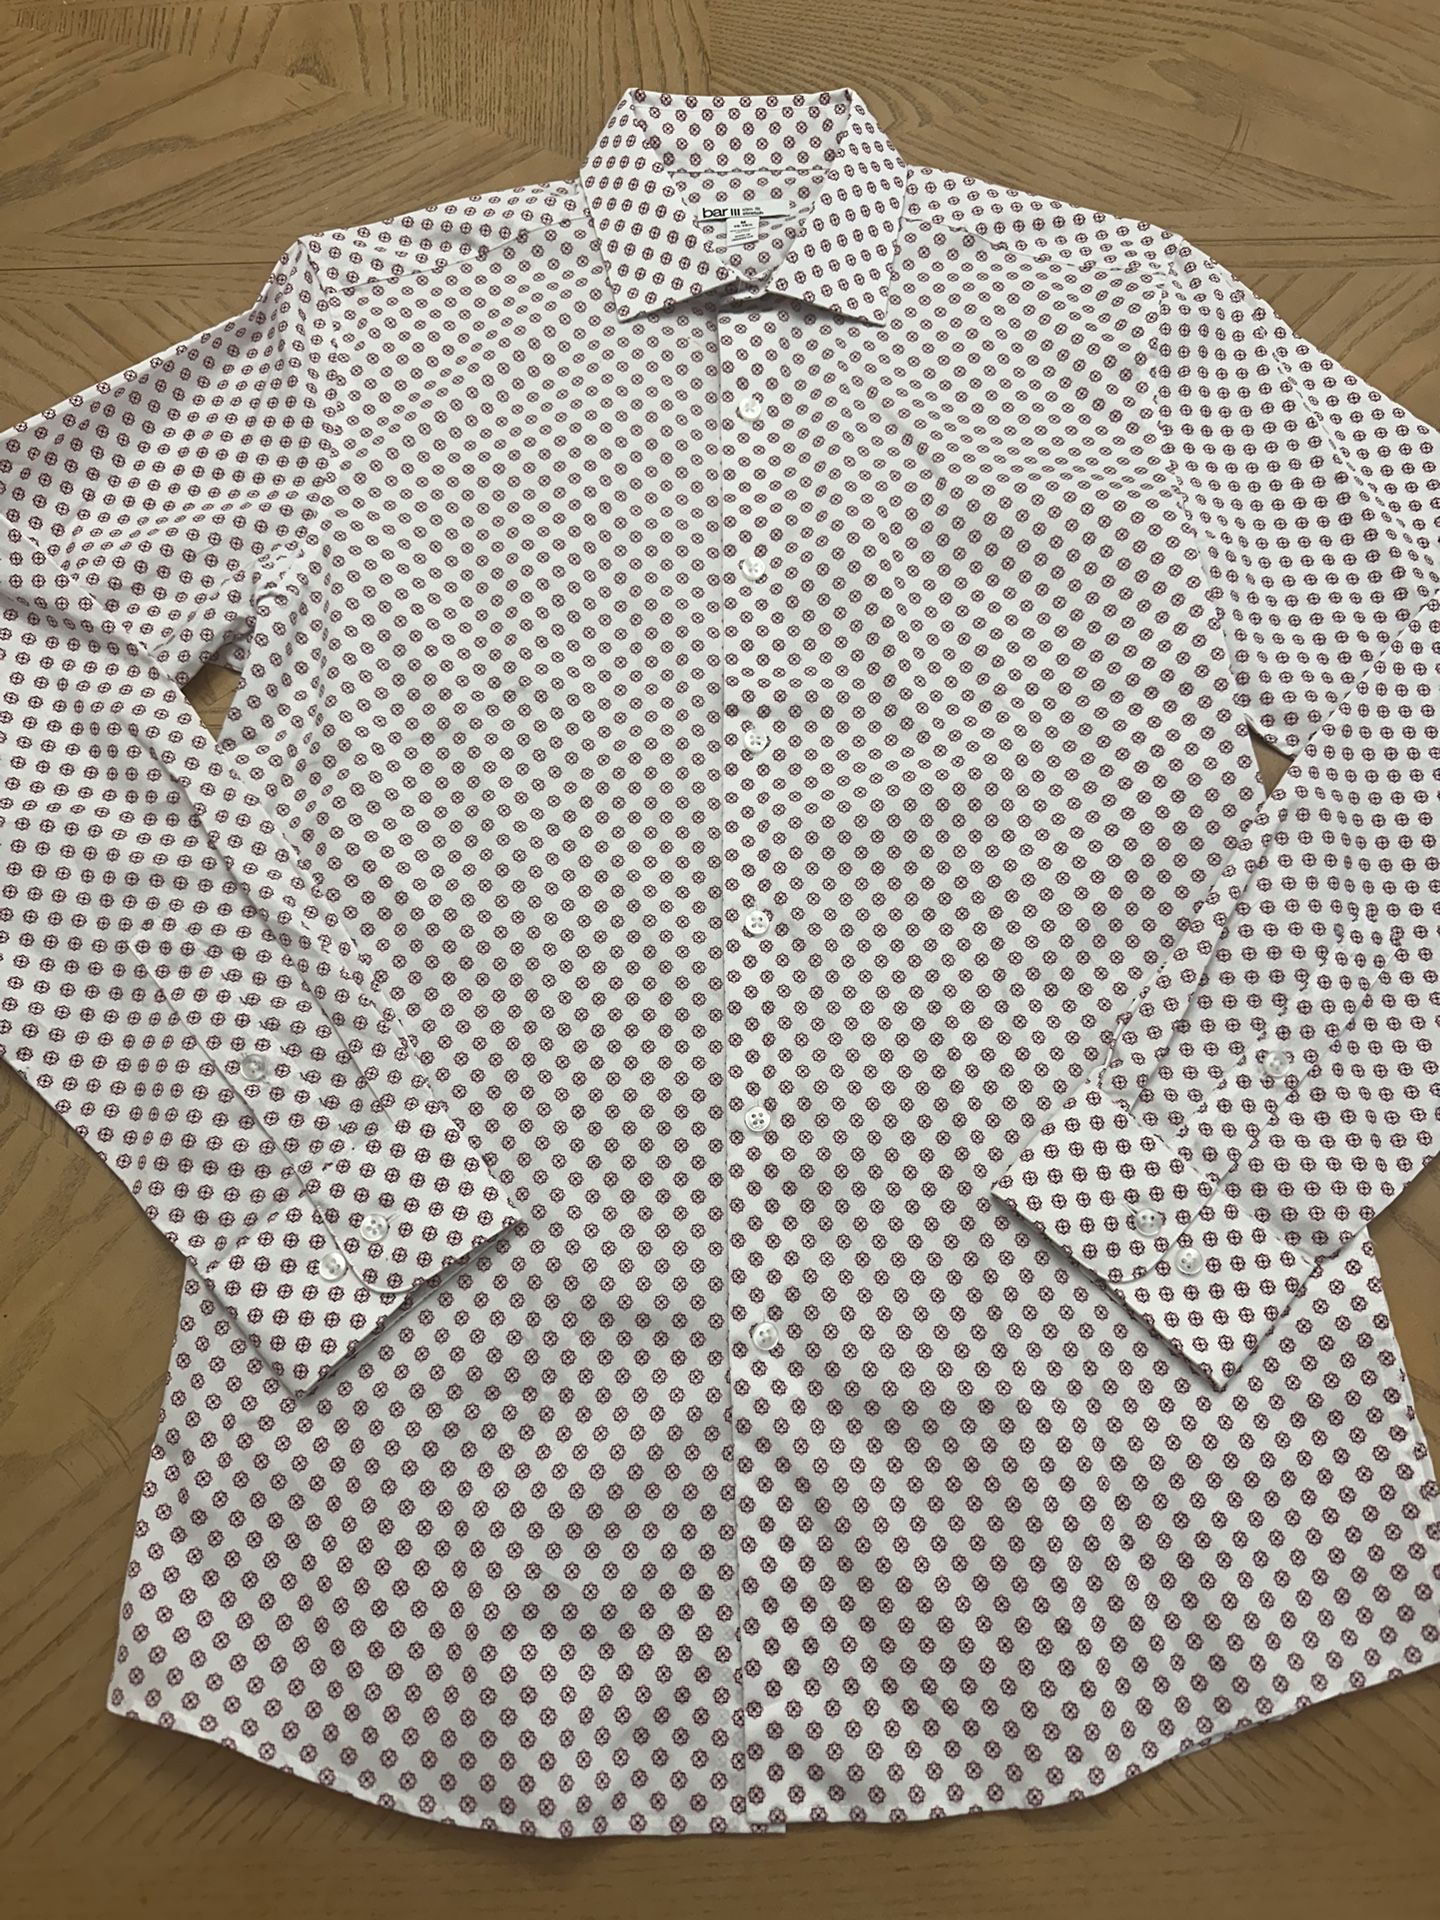 Bar lll Shirt Mens Slim Fit Stretch white/pink/black pattern dress shirt Size medium 